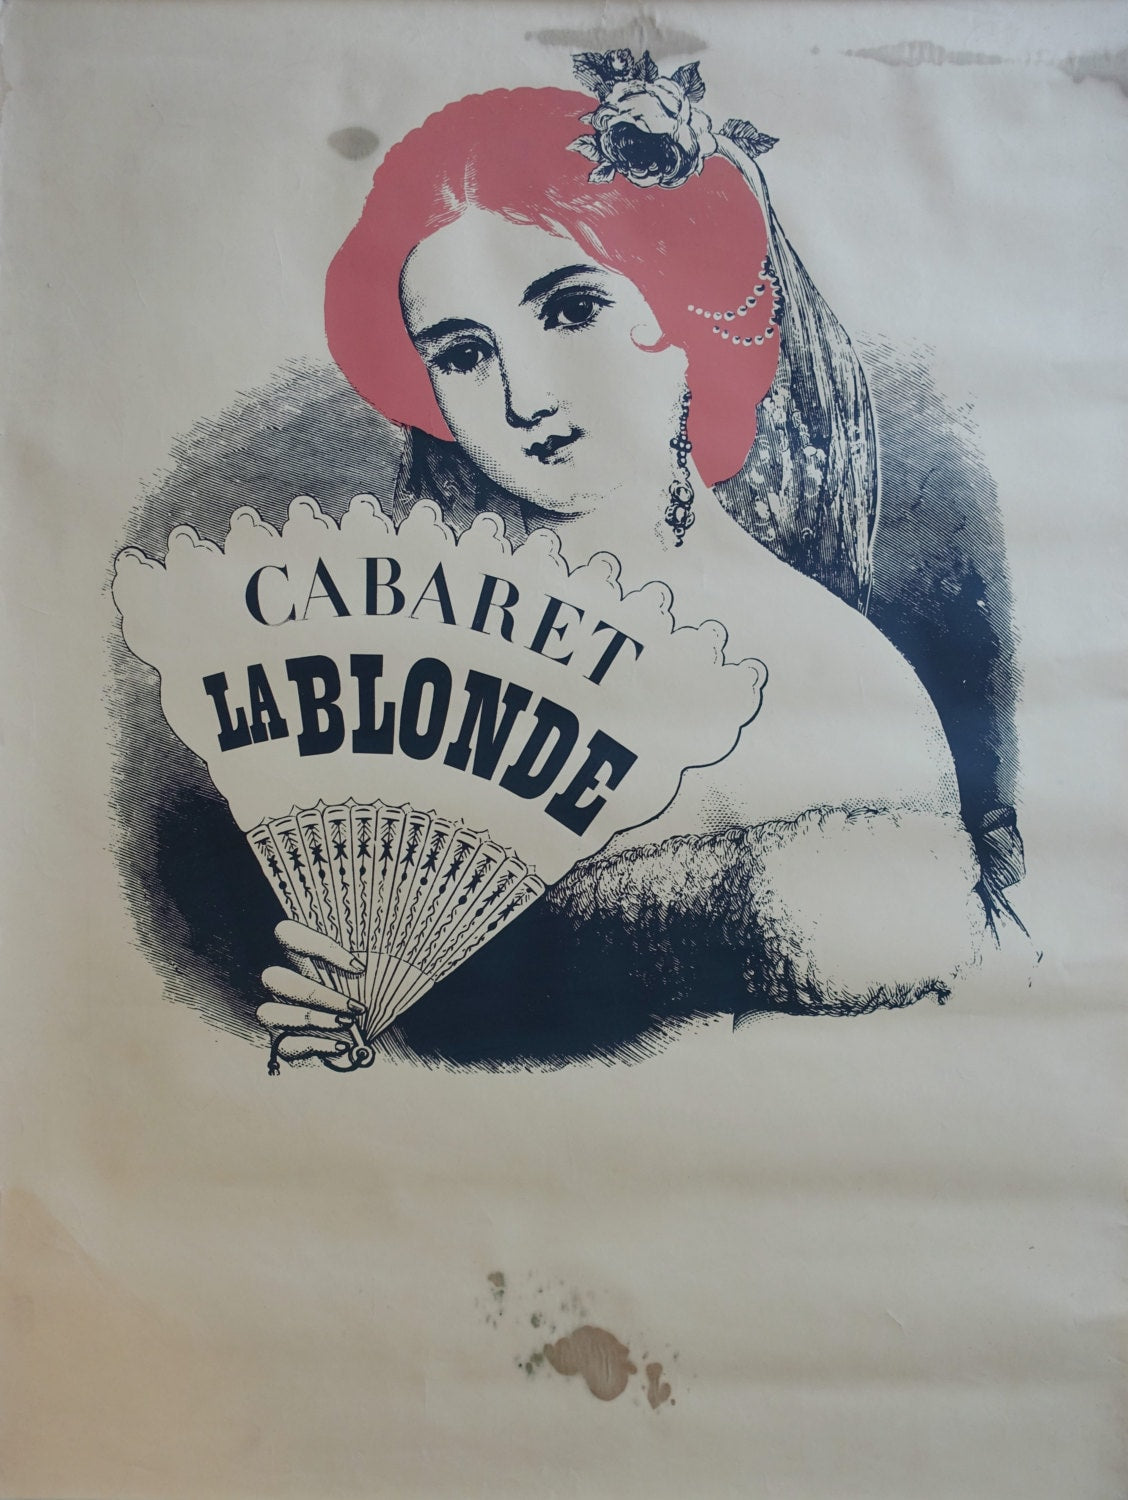 1940s Cabaret "La Blonde" in Tivoli (White Version) - Original Vintage Poster